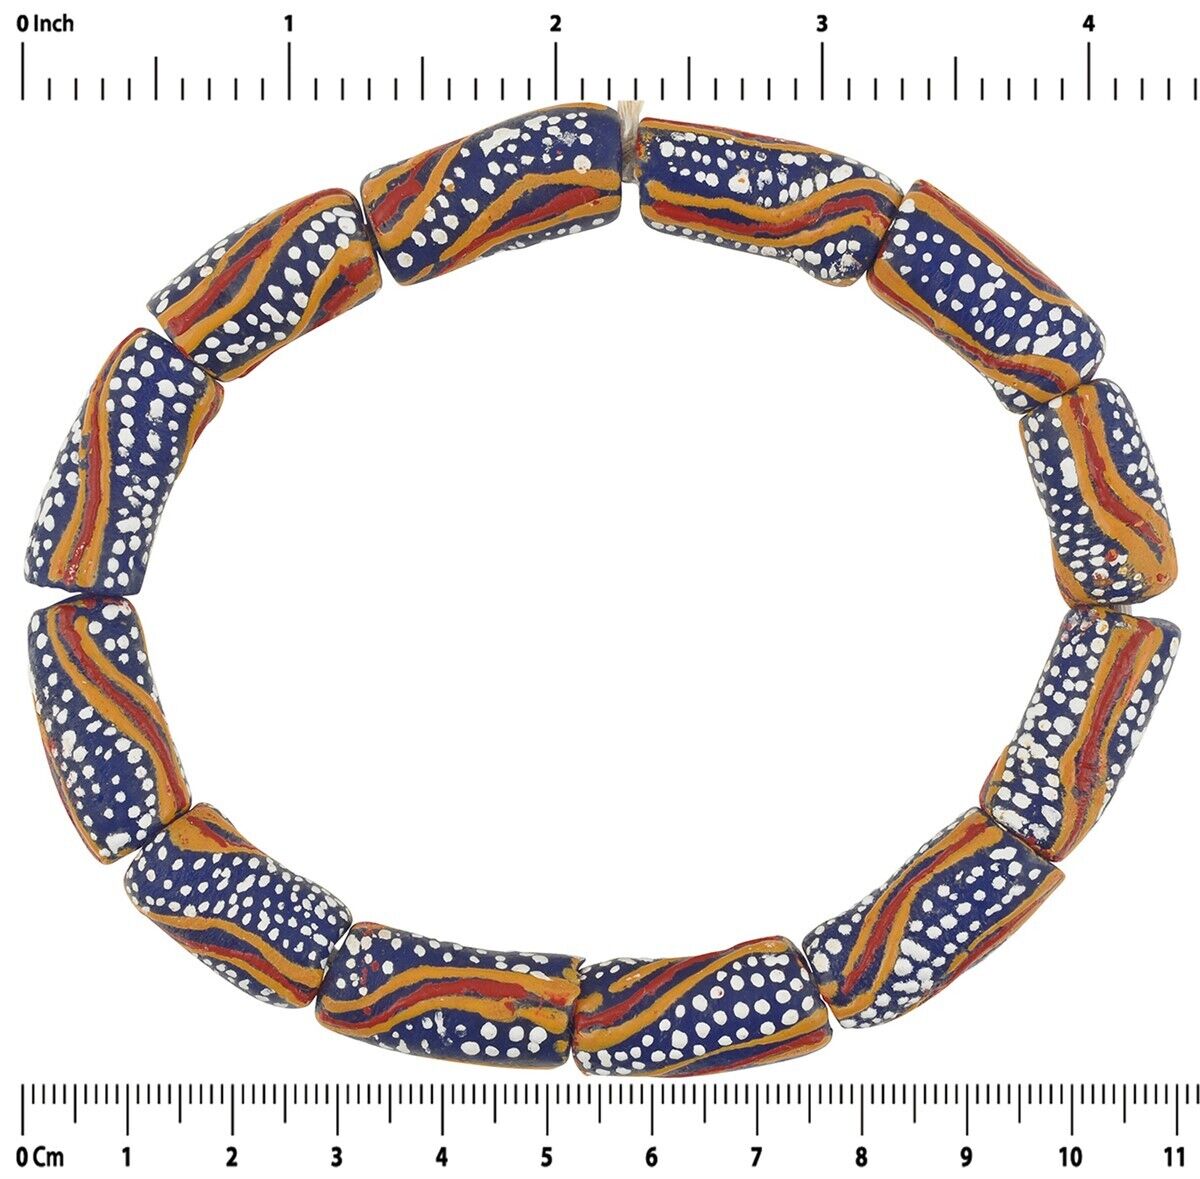 African beads powder glass handmade Ghana tribal jewelry bracelet - Tribalgh